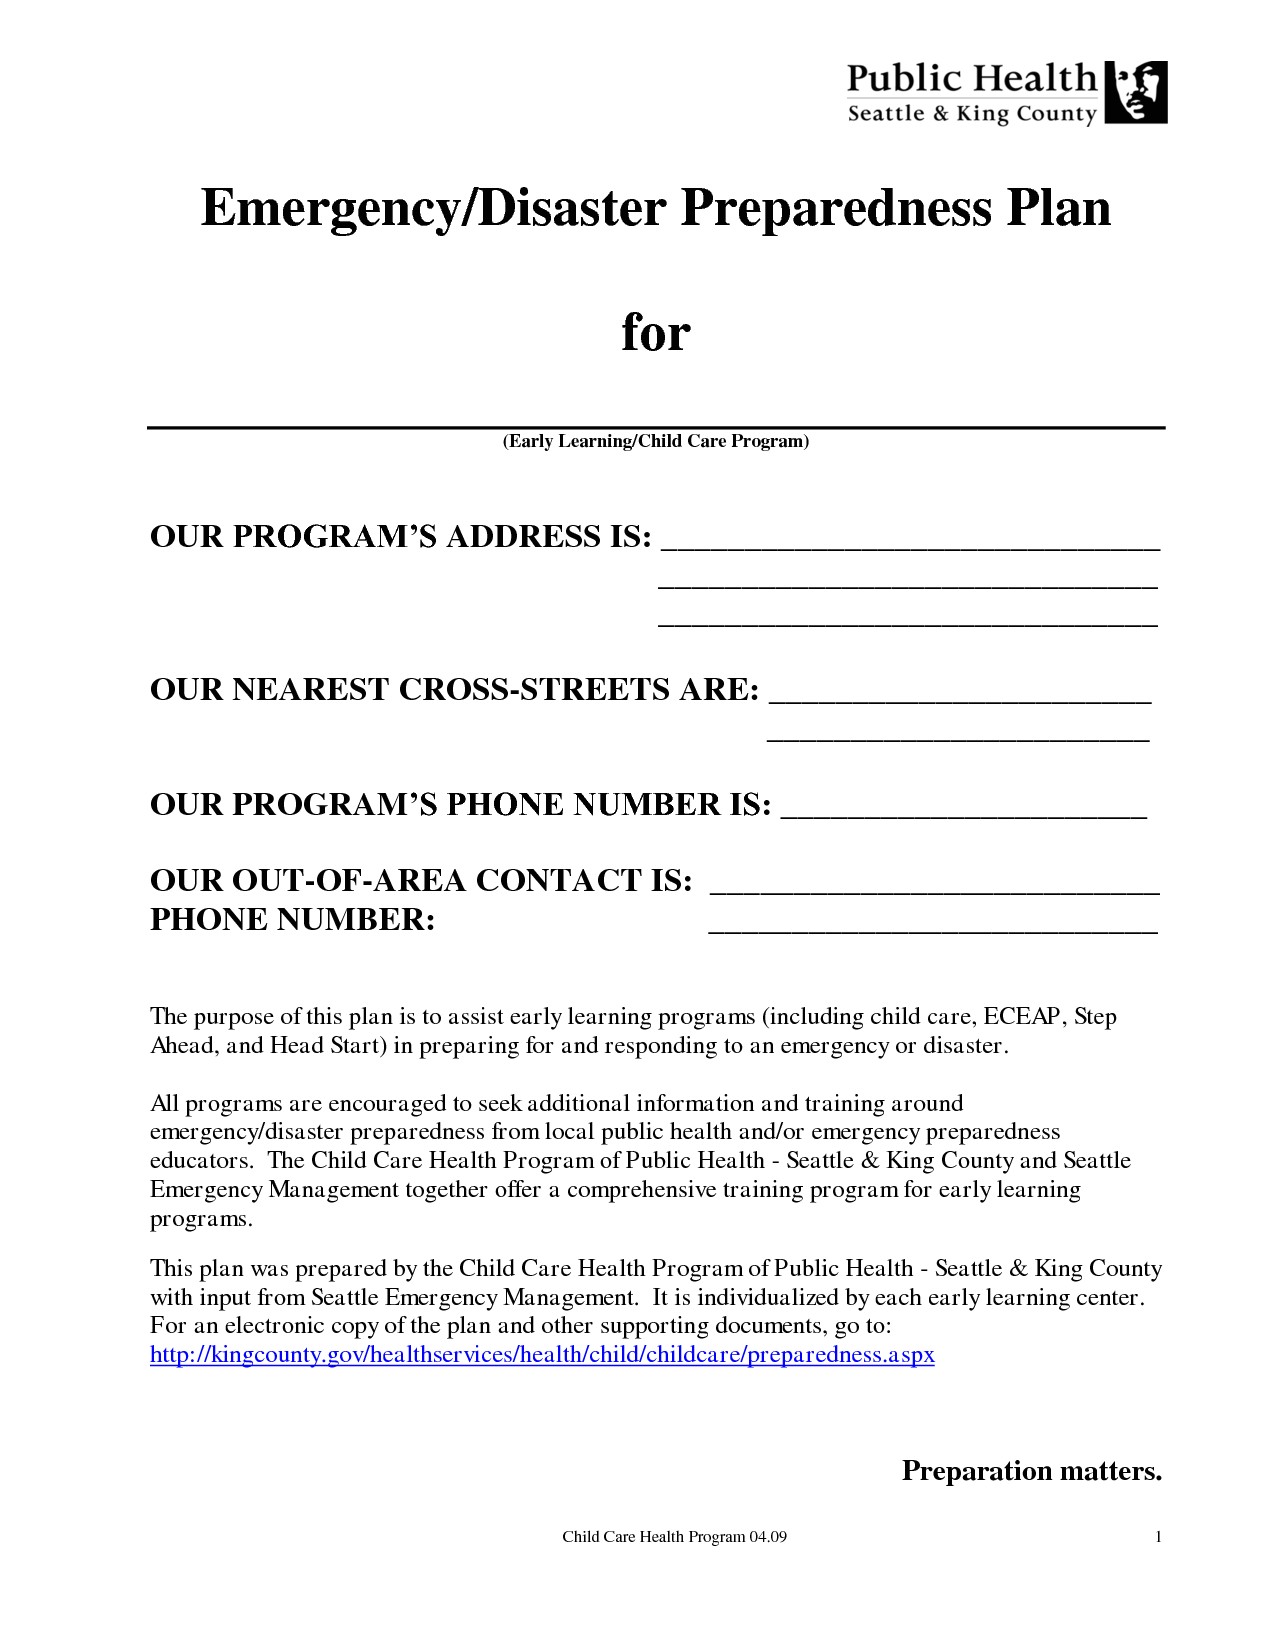 emergency-preparedness-plan-for-home-daycare-plougonver